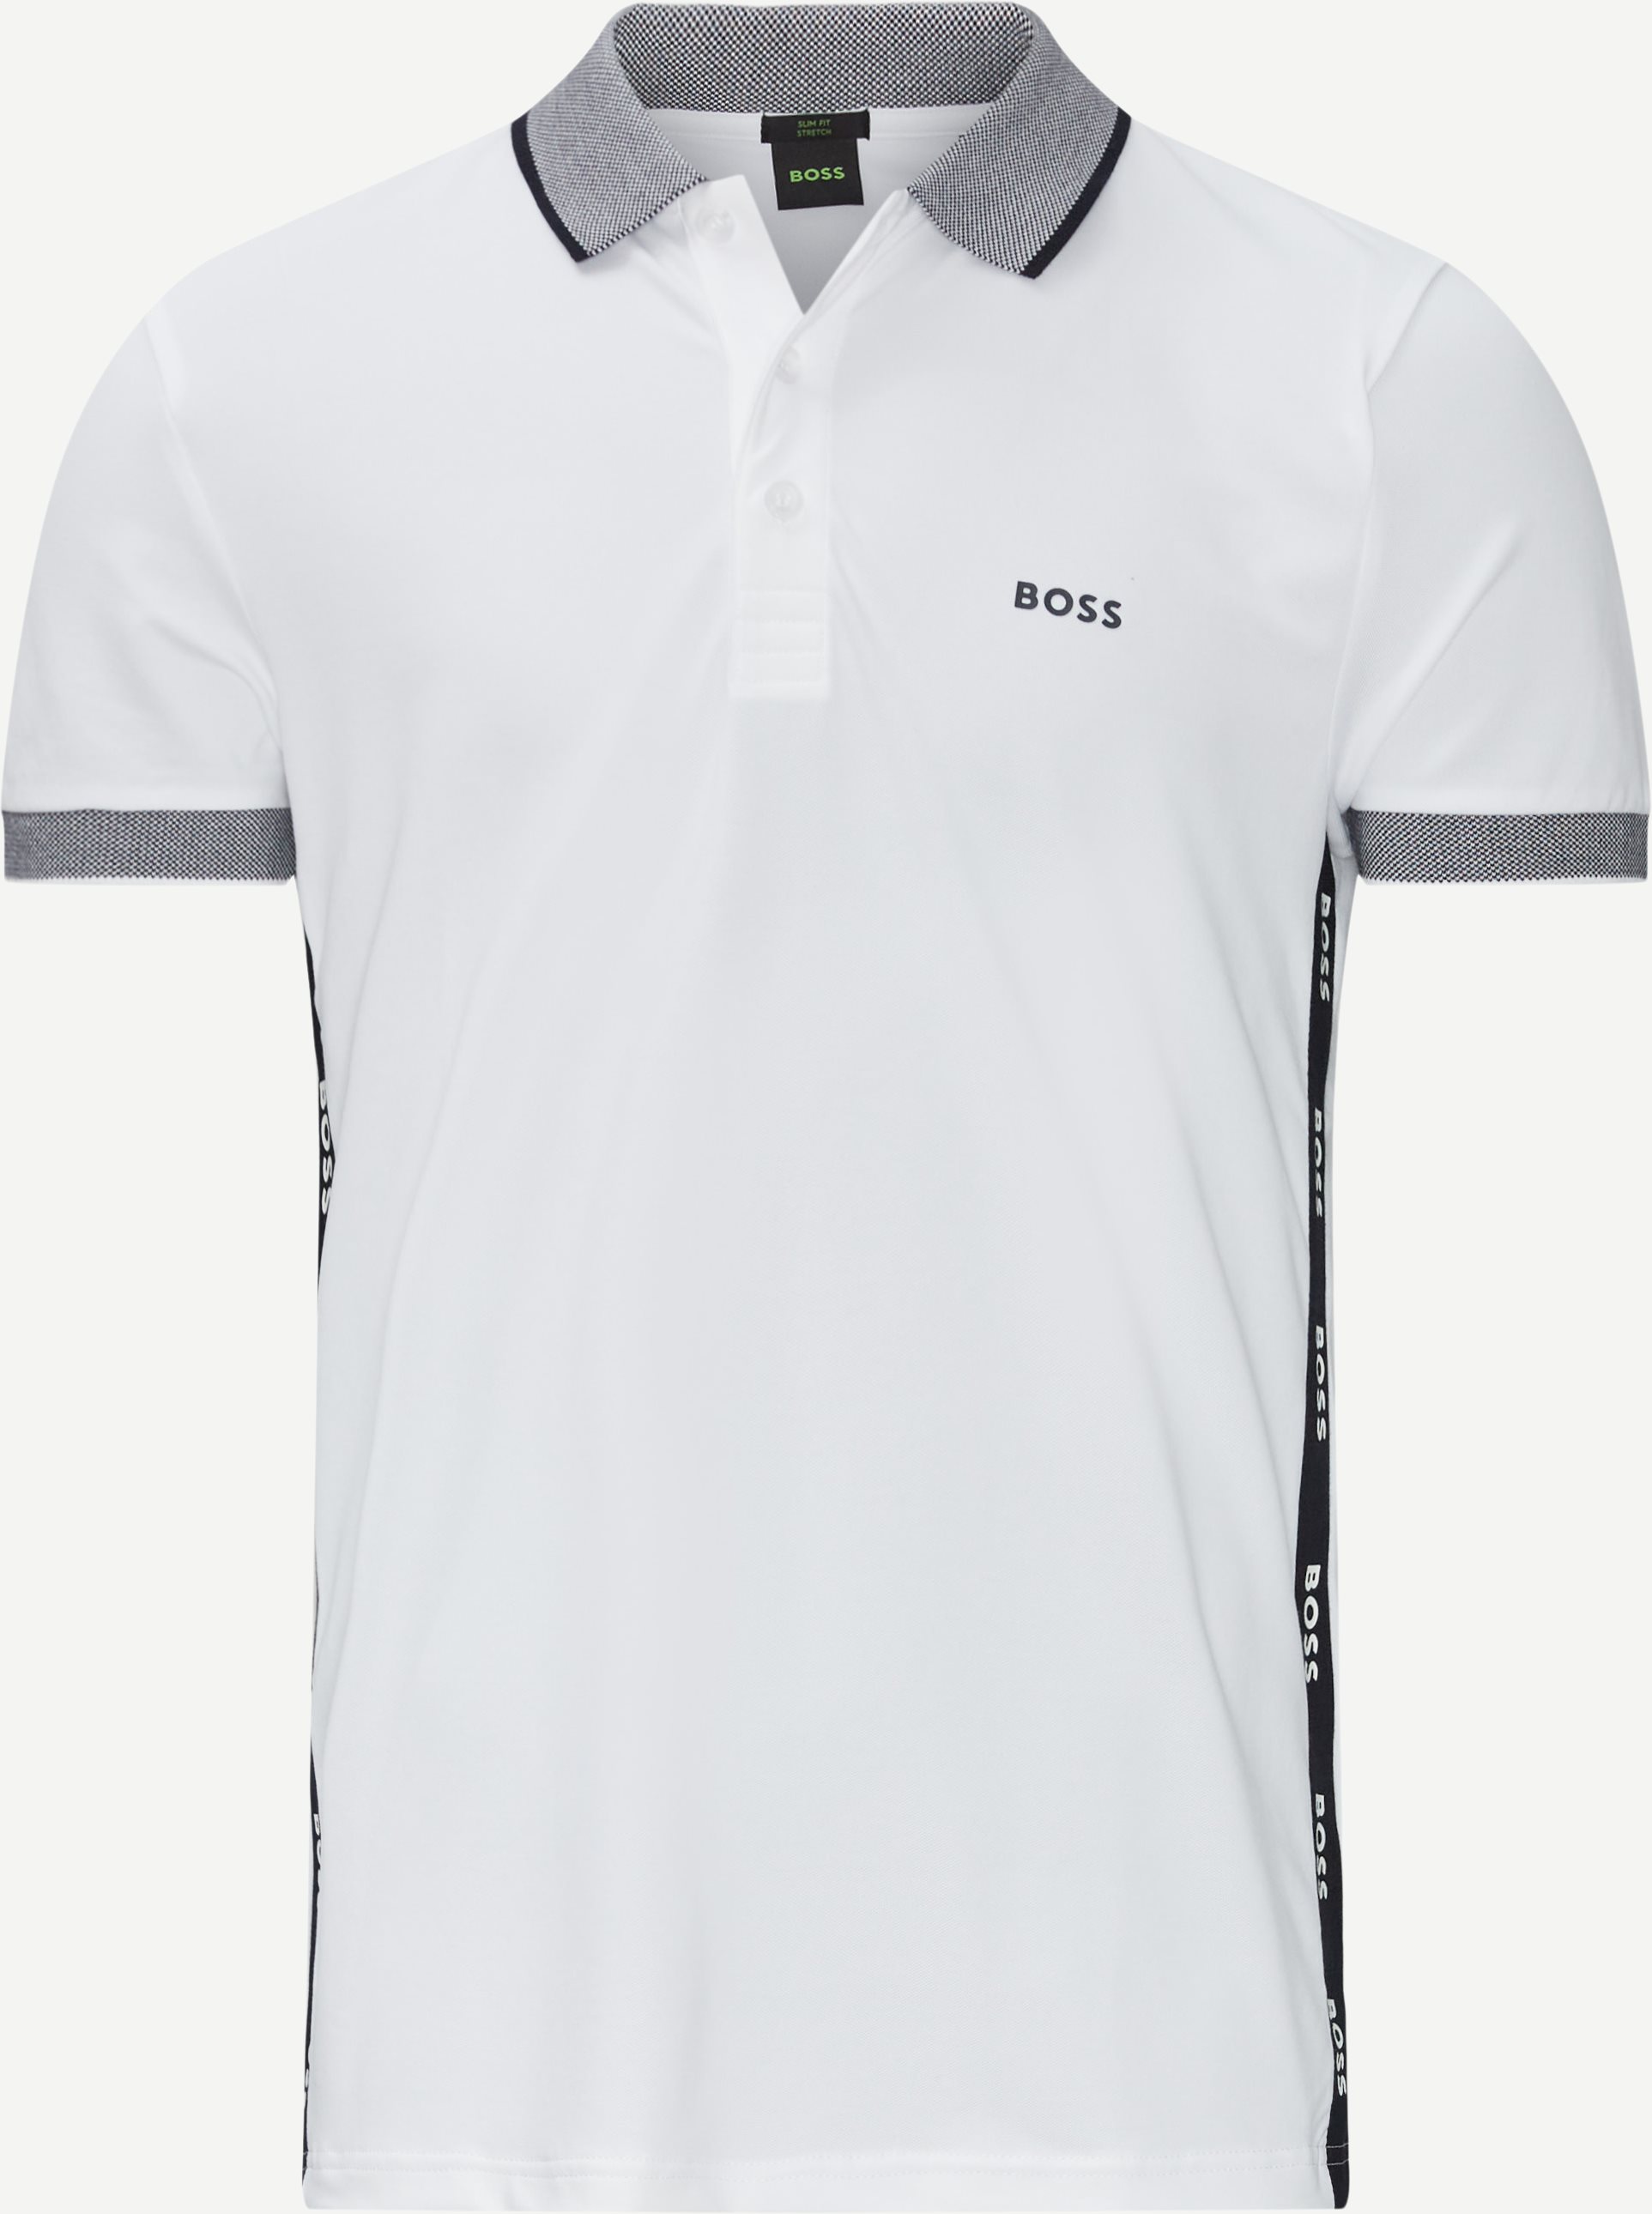 Paule Polo T-shirt - T-shirts - Slim fit - Hvid